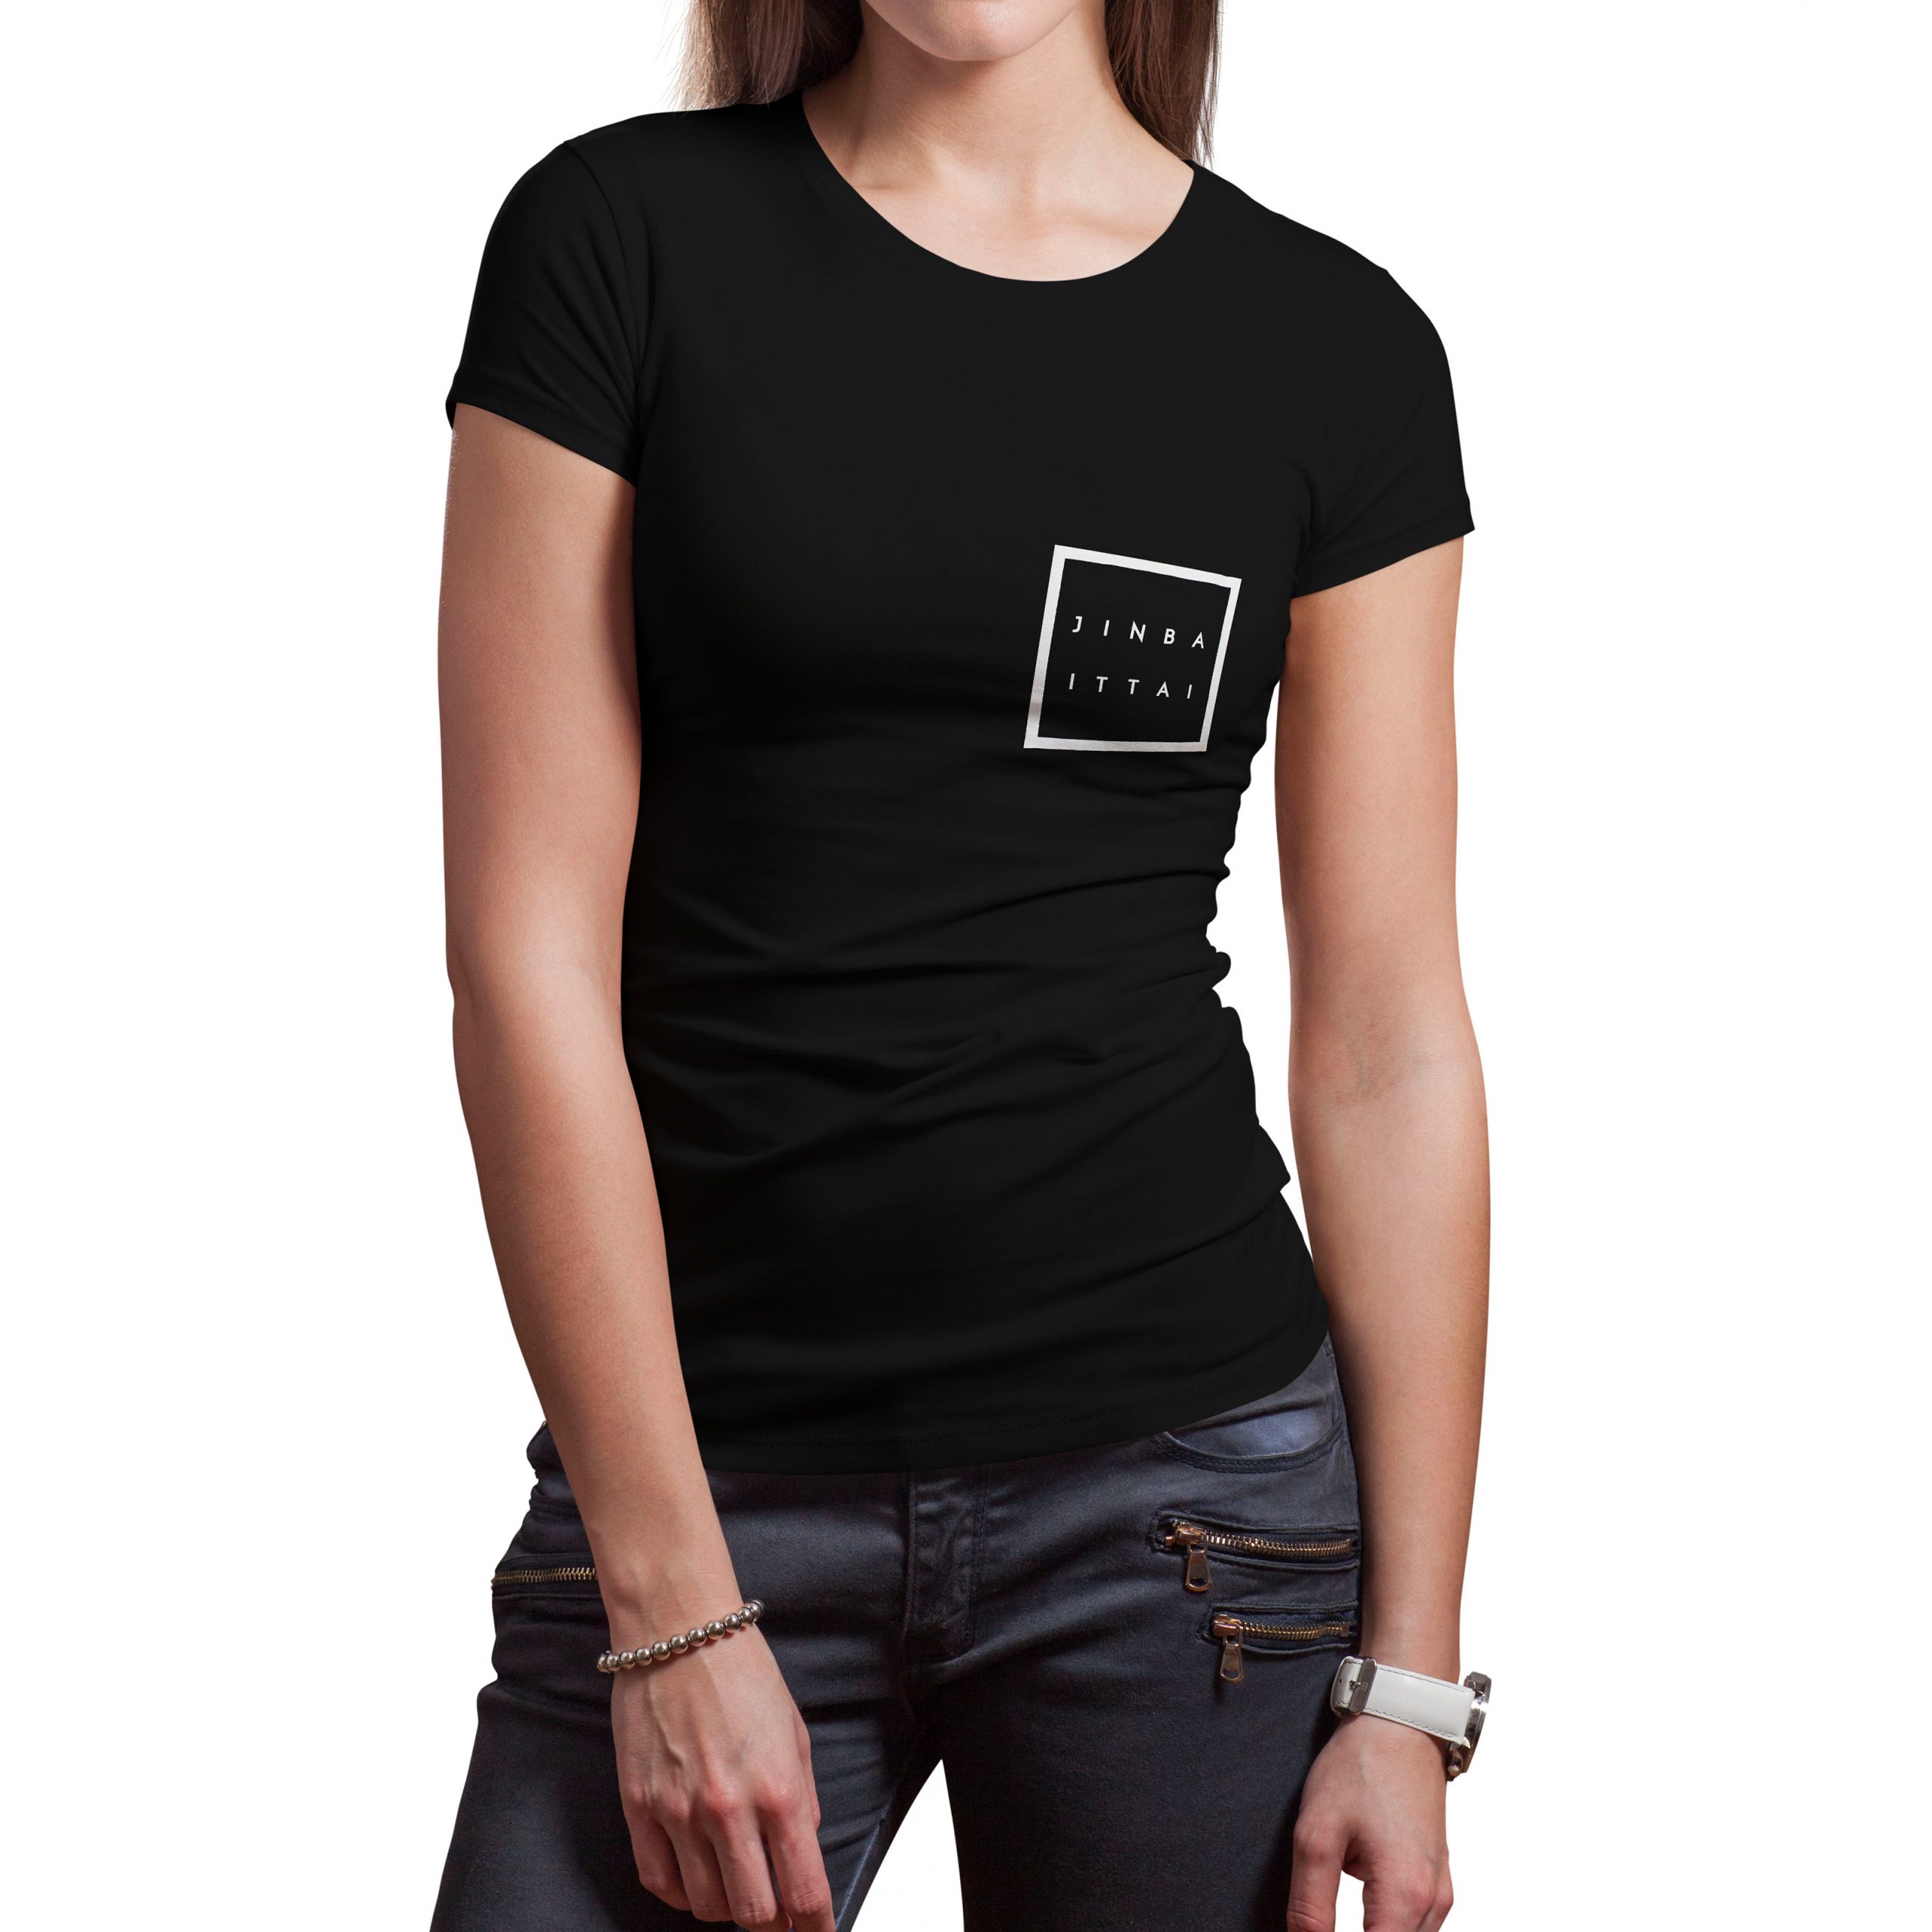 Camiseta Negra - Compra Online Camiseta Negra en Tienda .co